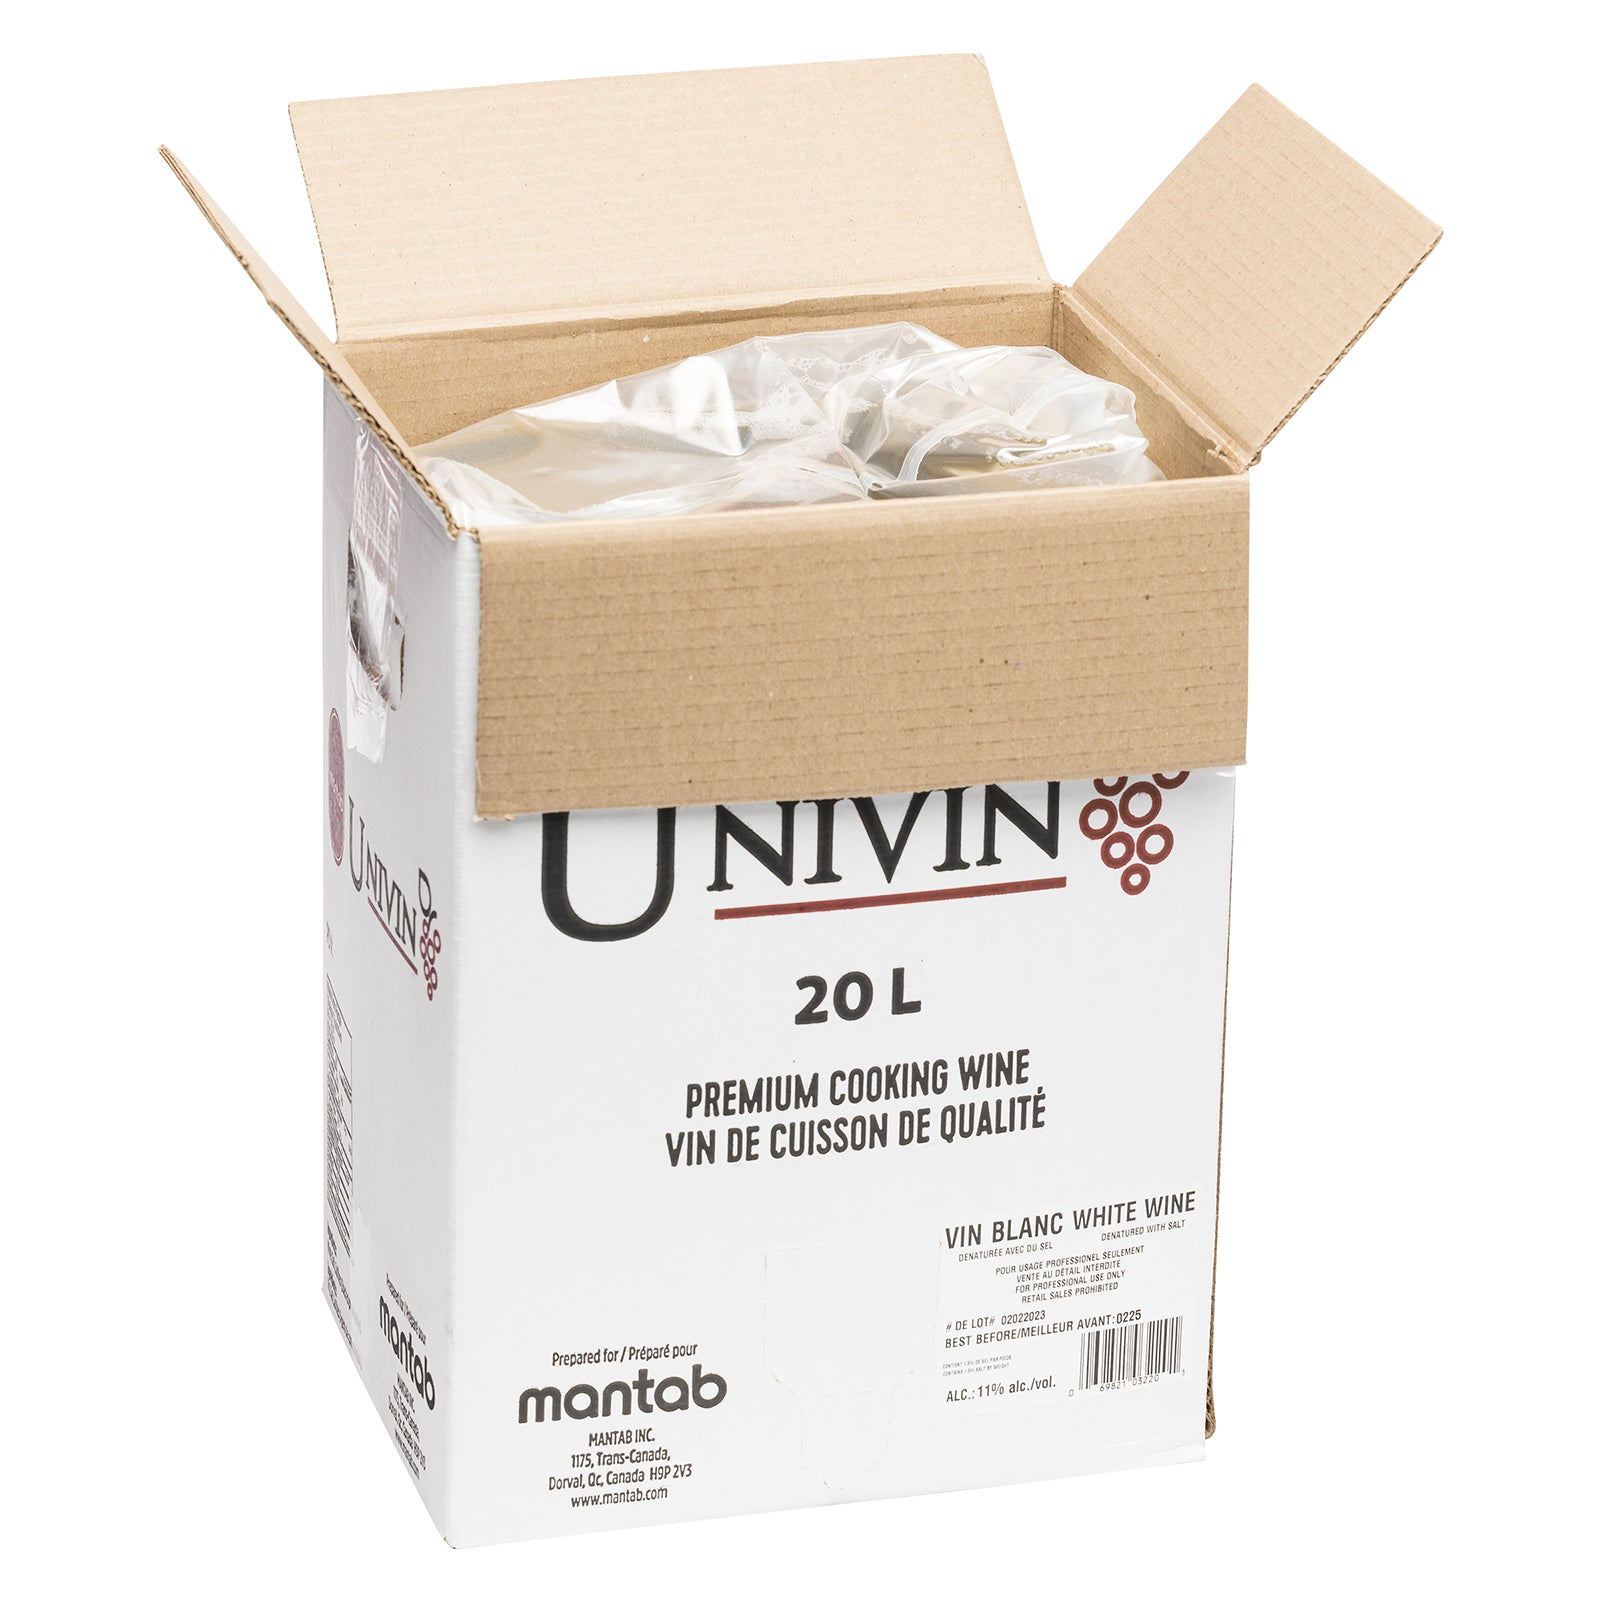 UNIVIN Wine denatured white 11%